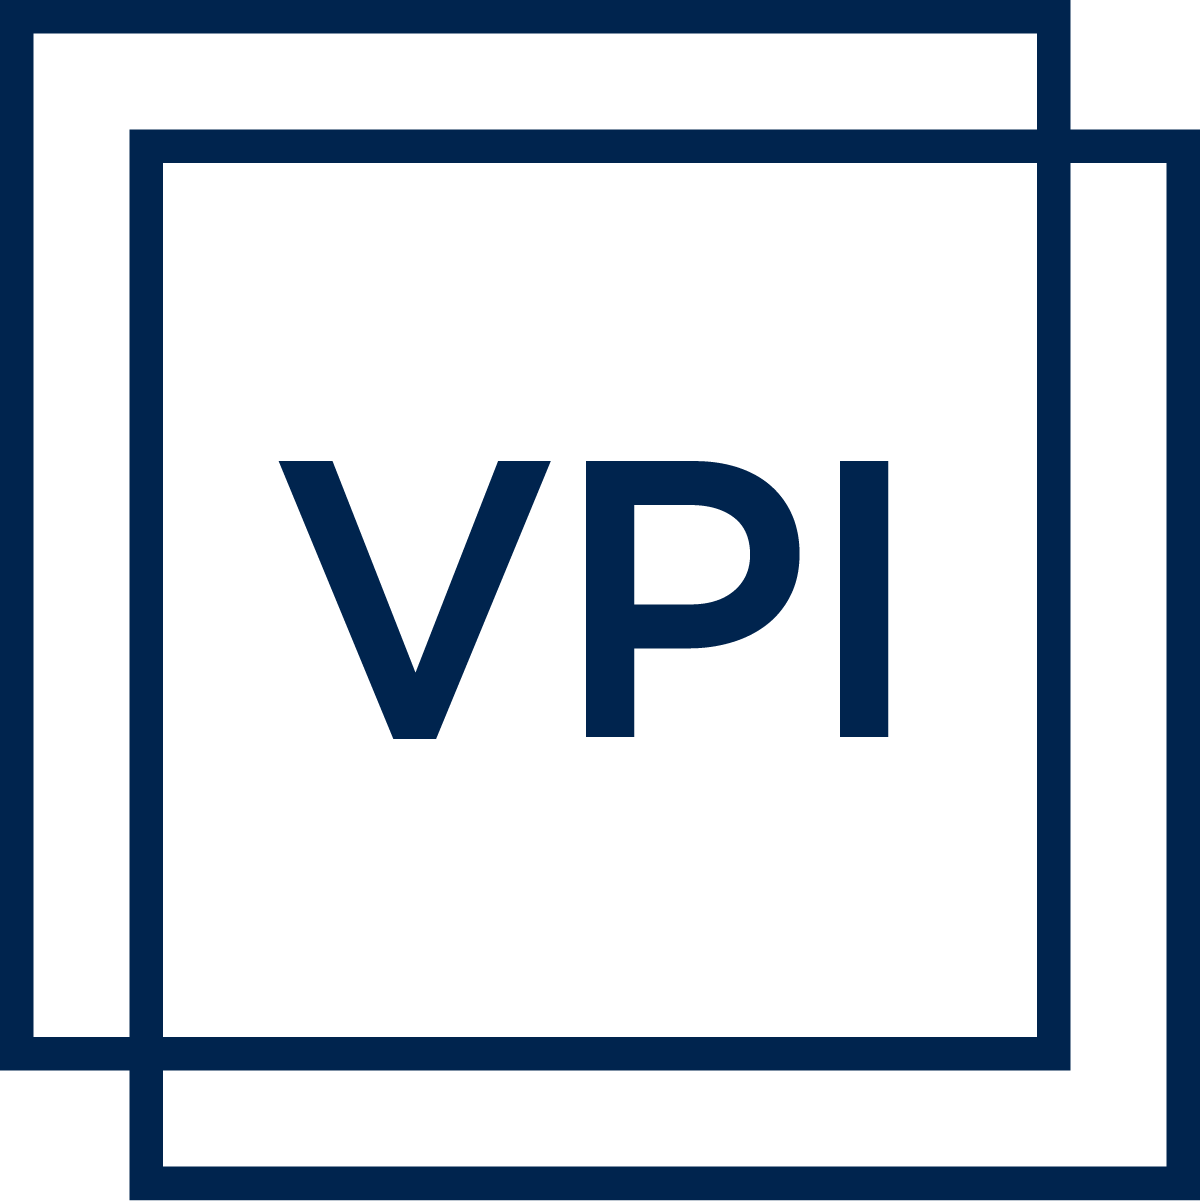 VPI, Inc.